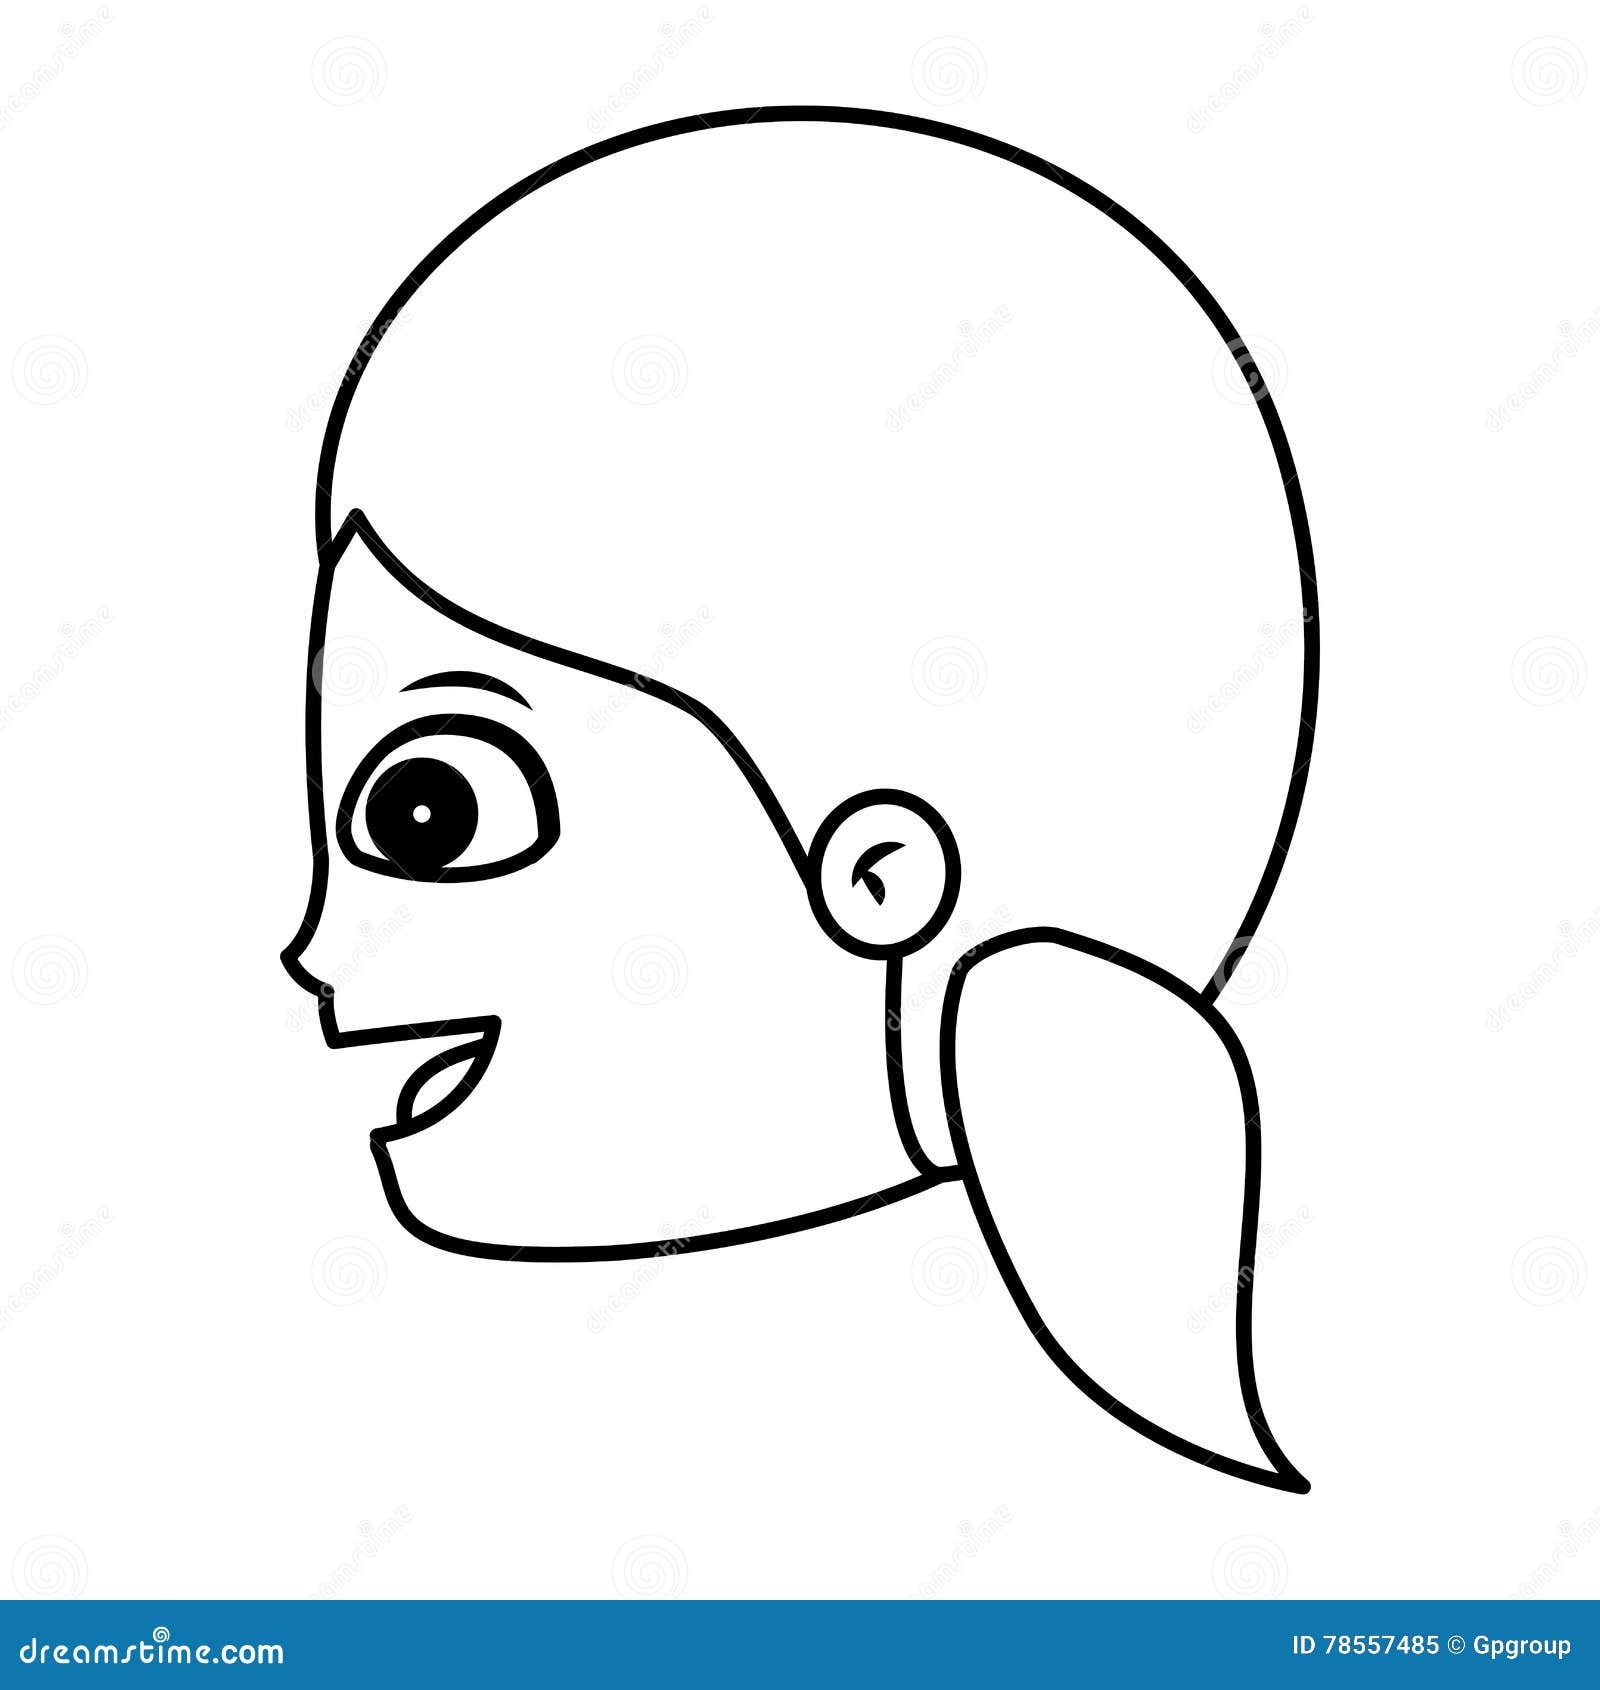 Girl cartoon face design stock vector. Illustration of face - 78557485